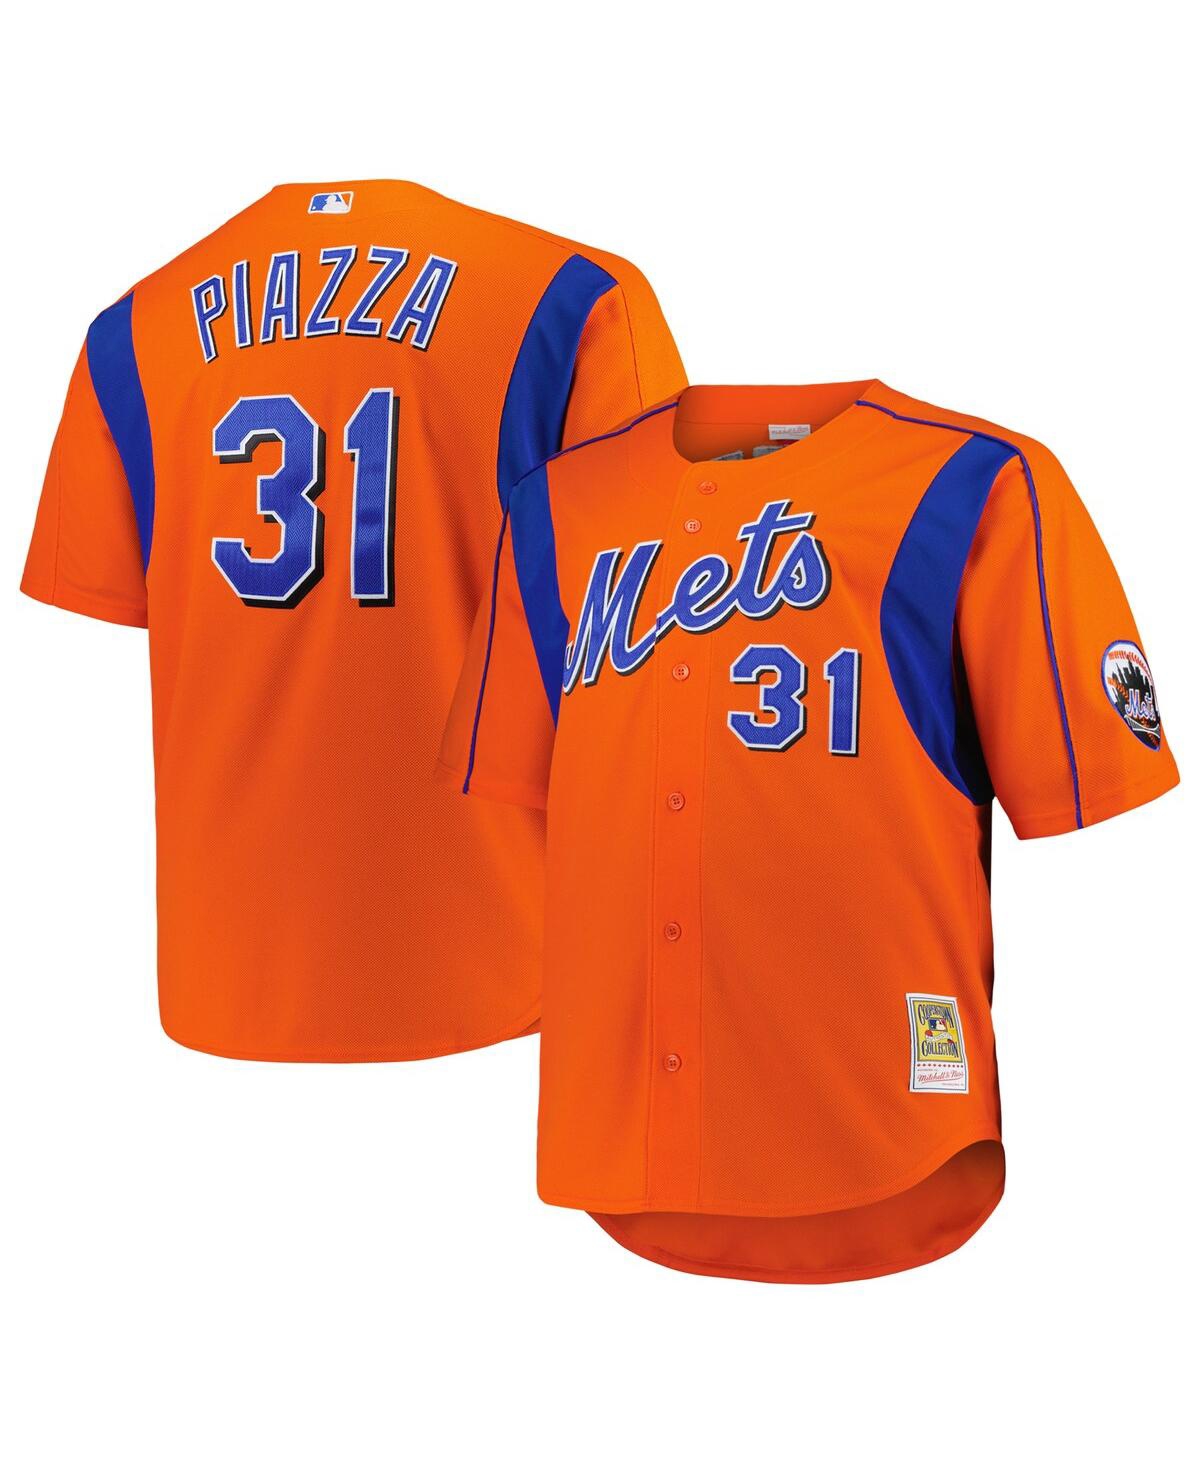 Mitchell Ness Men's Mike Piazza Orange New York Mets Big Tall Cooperstown Collection Mesh Batting Practice Jersey - Orange